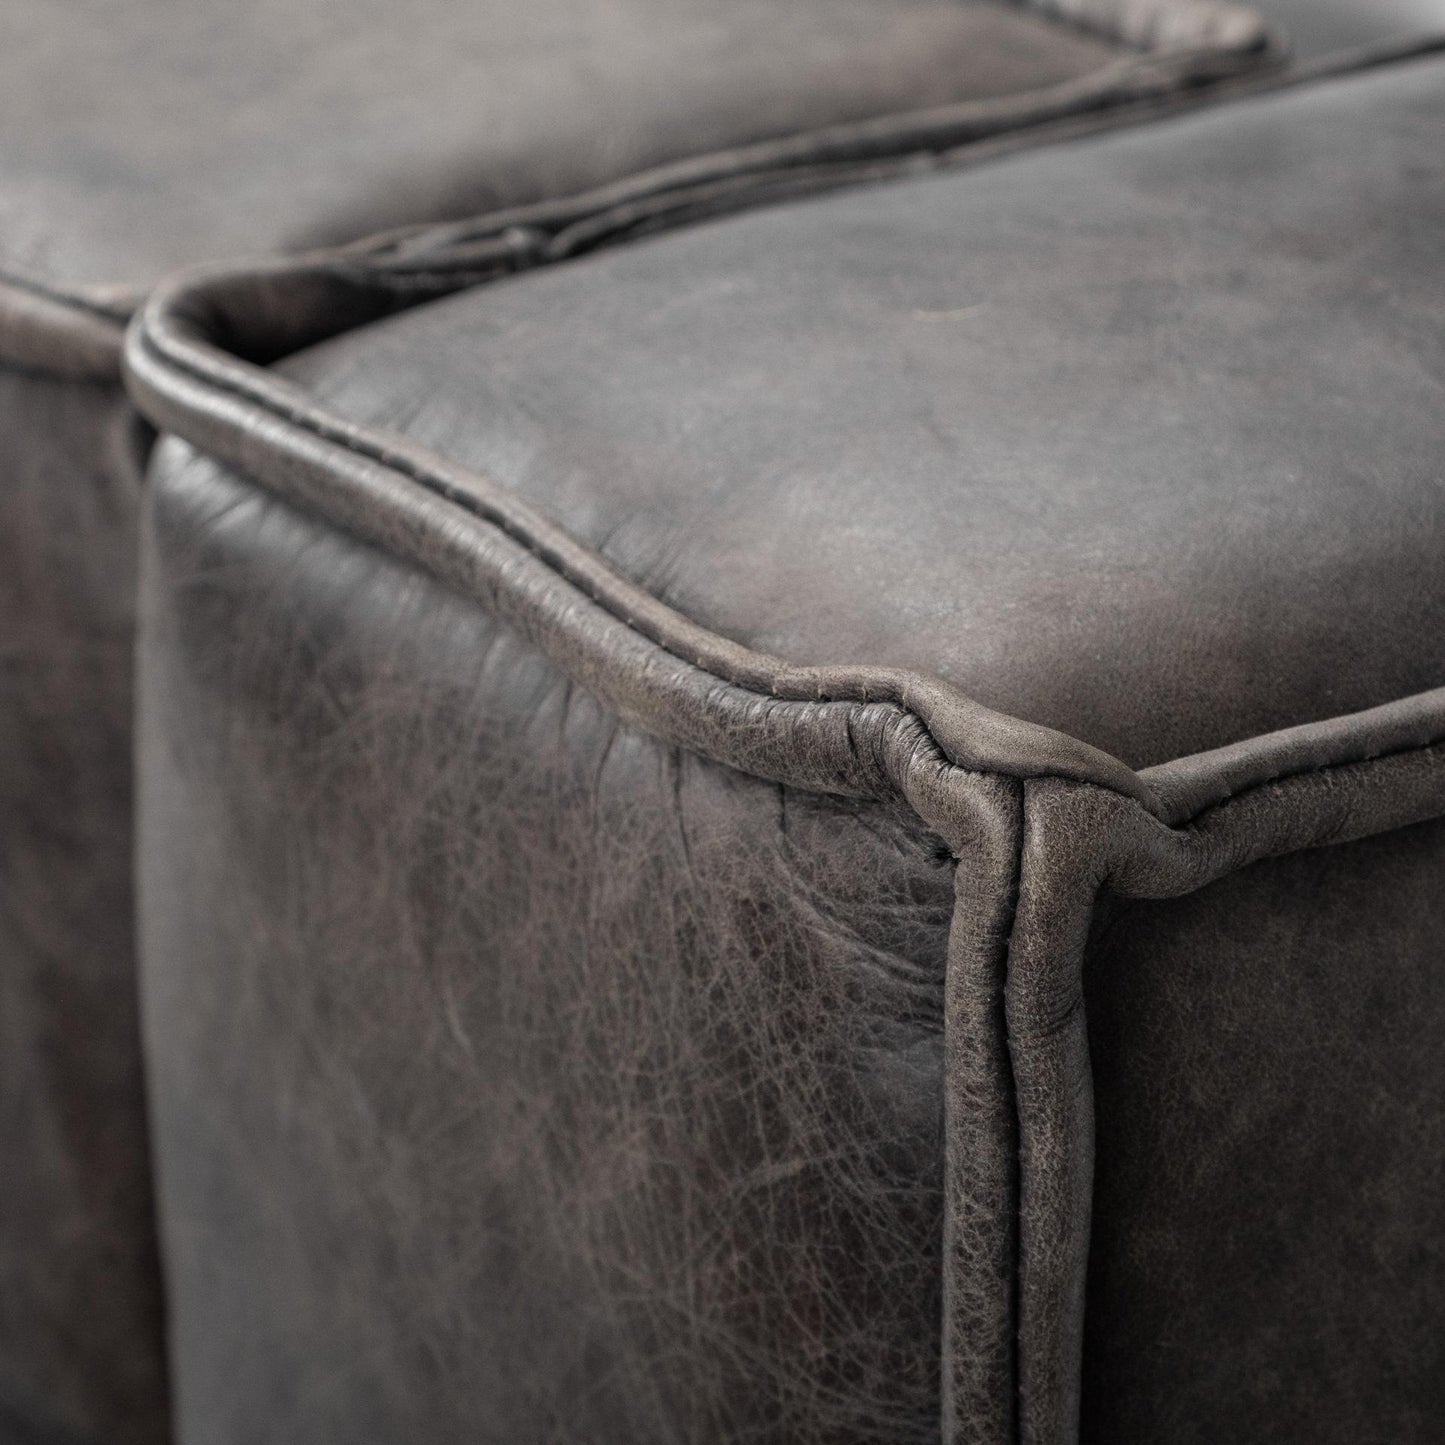 Stinson II 91" Black Leather Three Seater Sofa